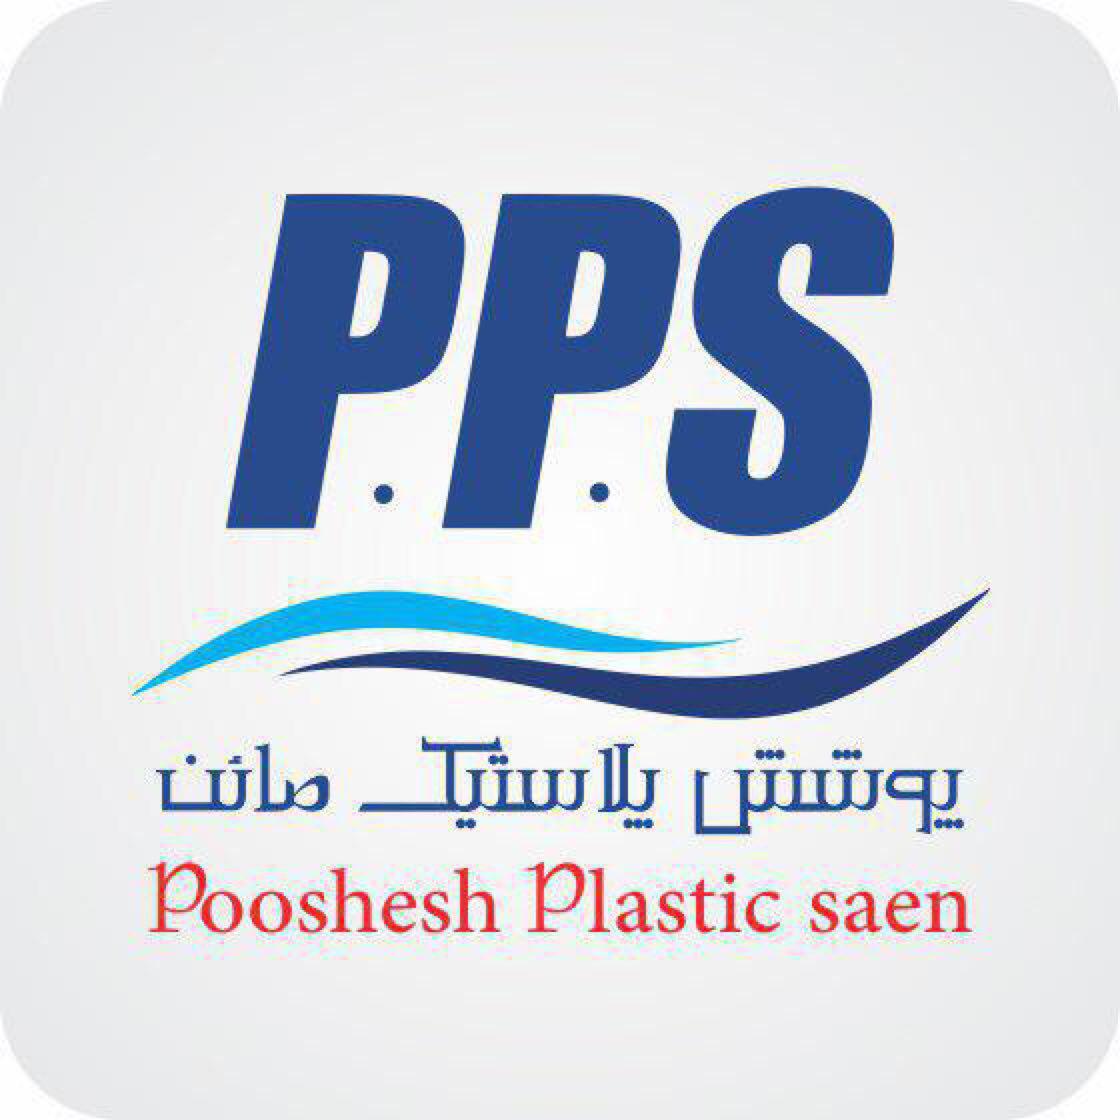 لوگوی شرکت پوشش پلاستیک صائن